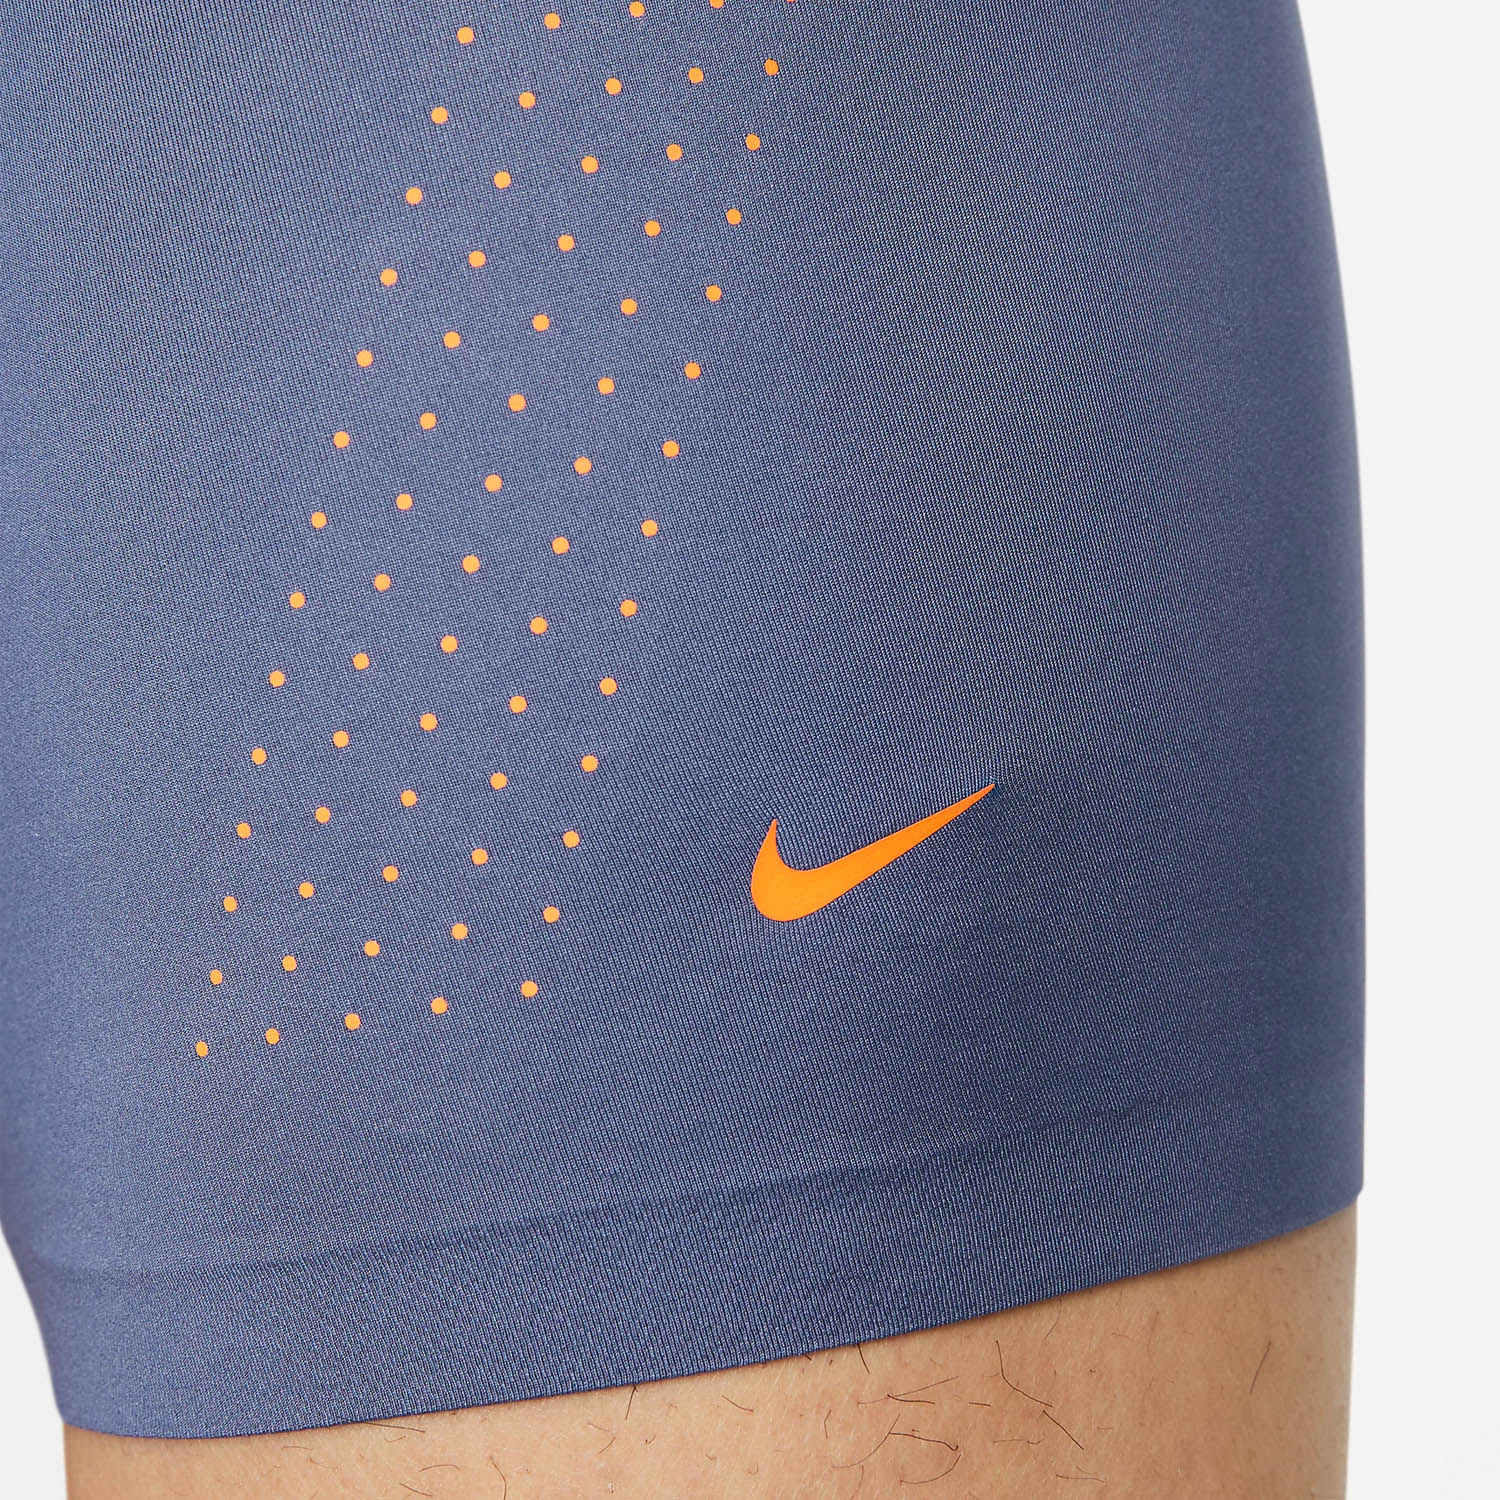 Nike Dri-FIT Elite Micro Boxer - Diffused Blue/Total Orange